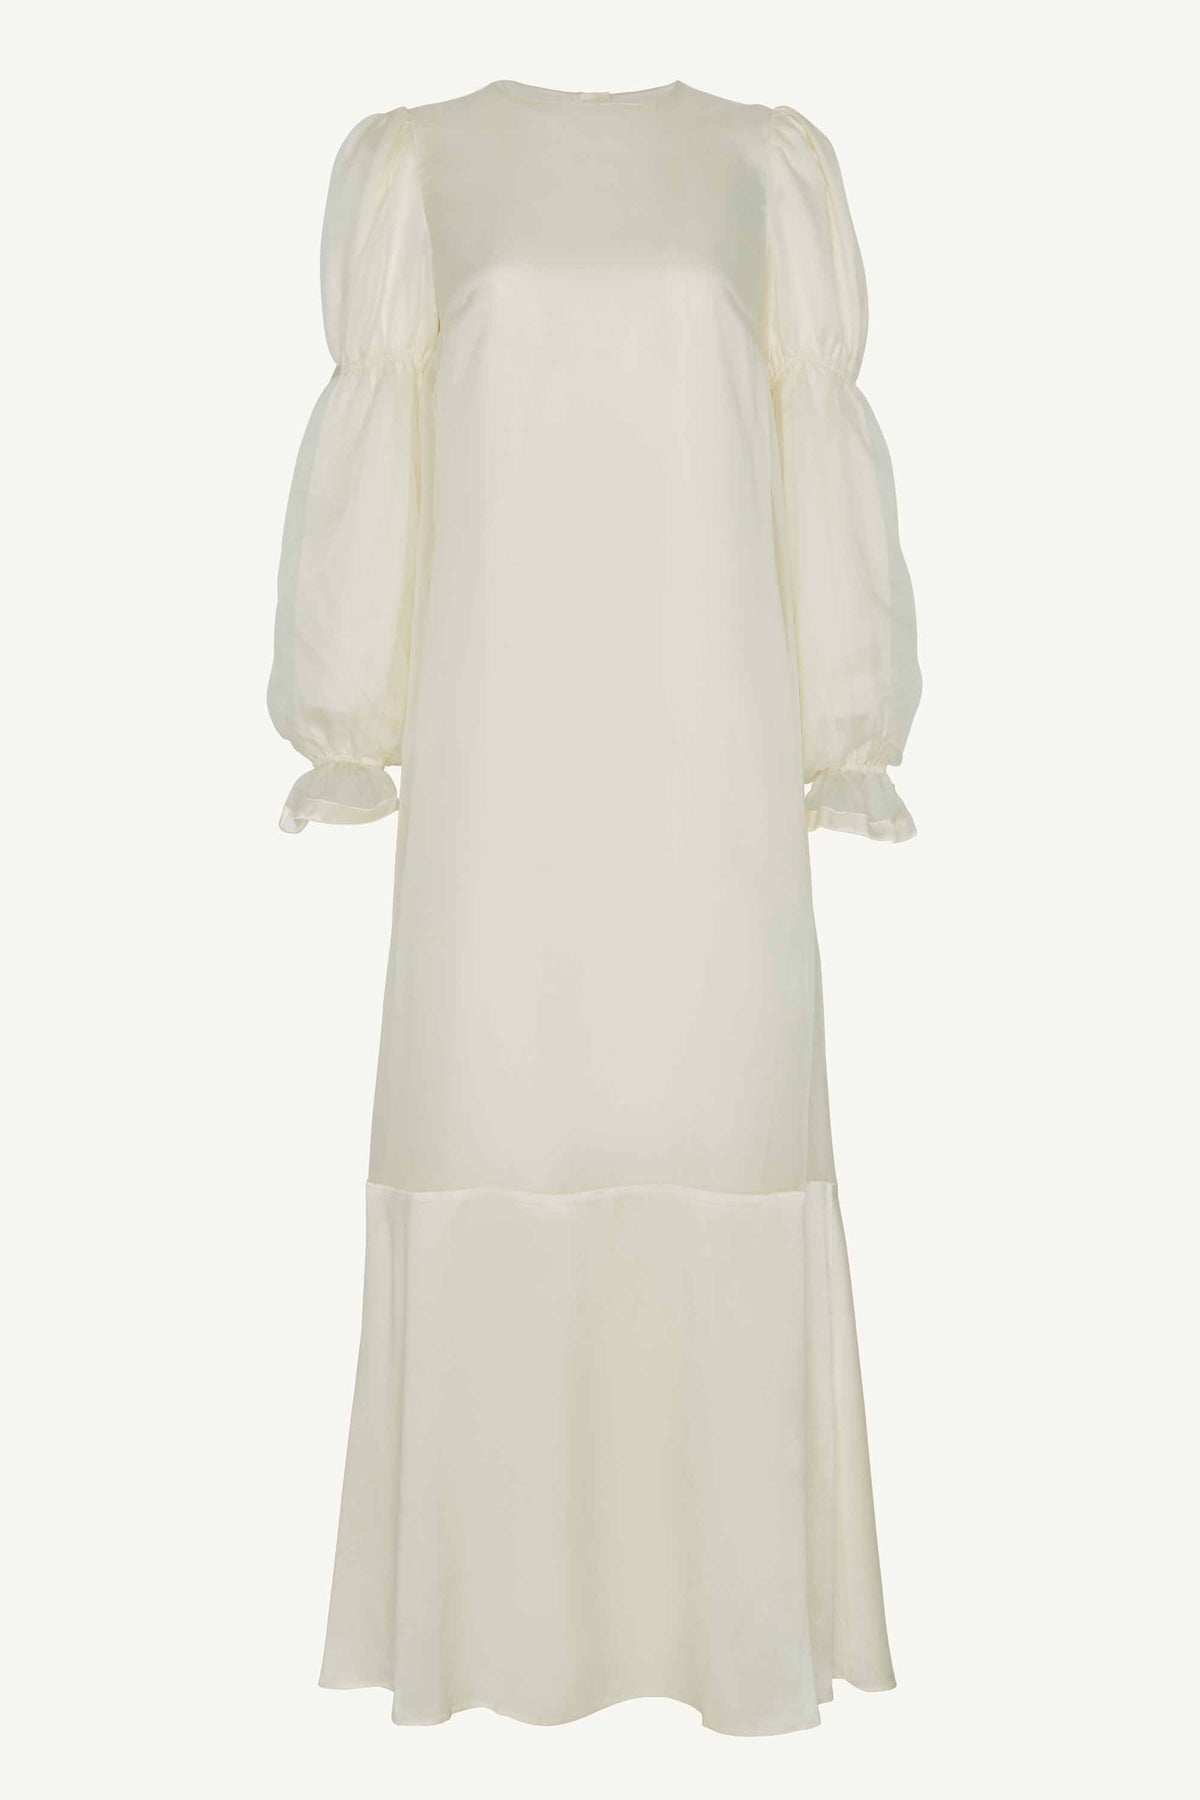 Silk Organza Satin Trim Maxi Dress - Off White Clothing epschoolboard 